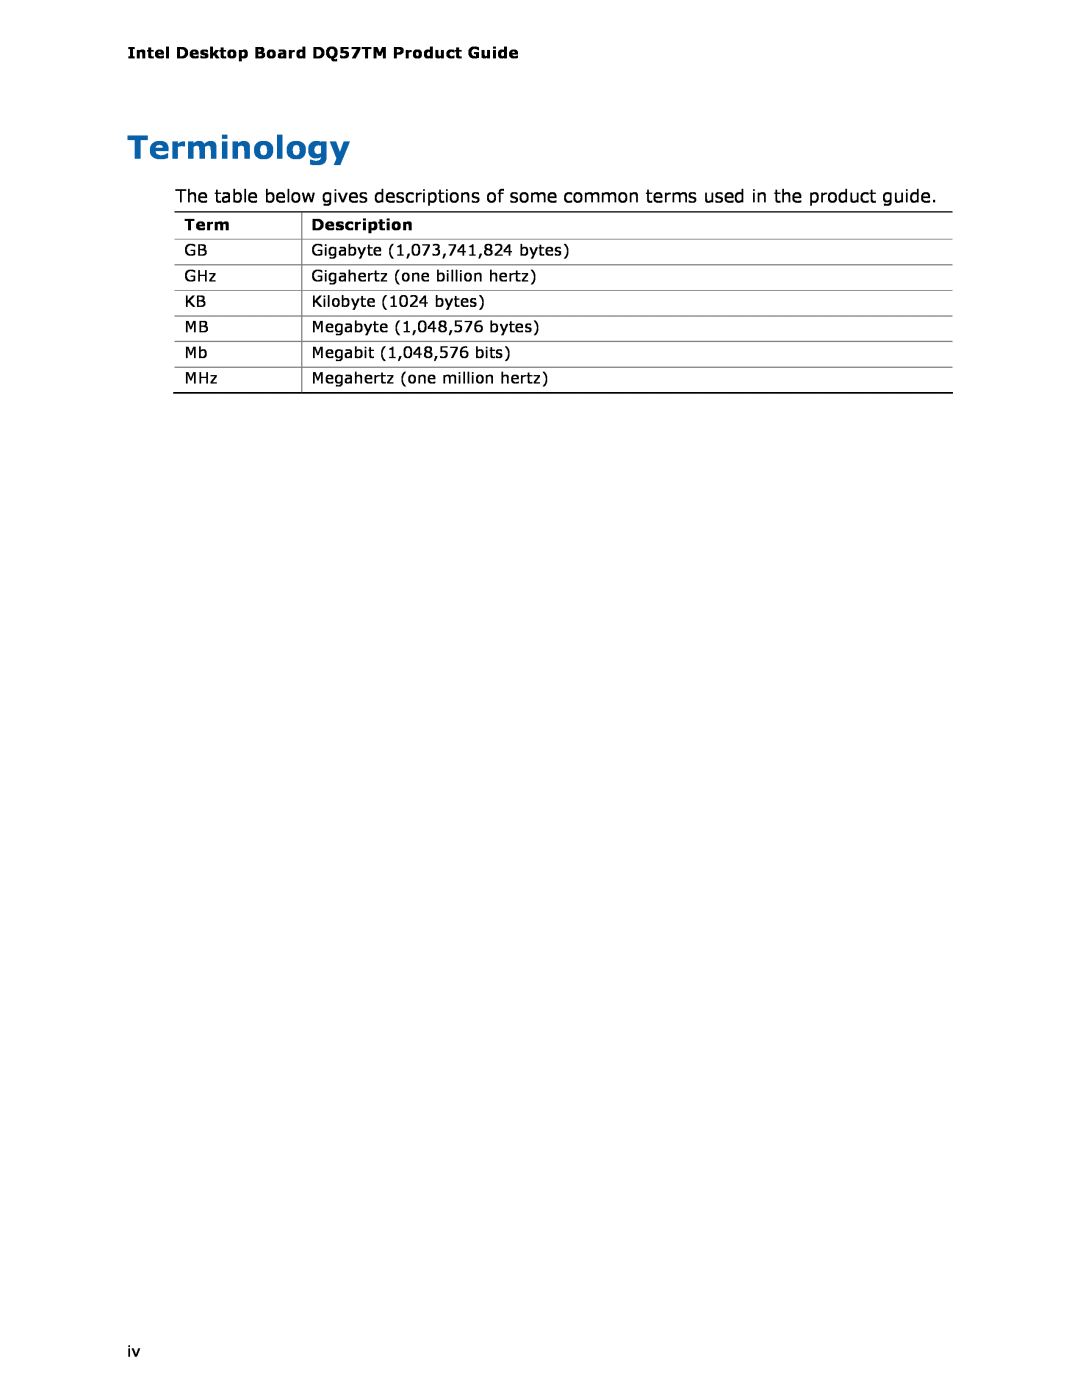 Intel manual Terminology, Intel Desktop Board DQ57TM Product Guide, Description 